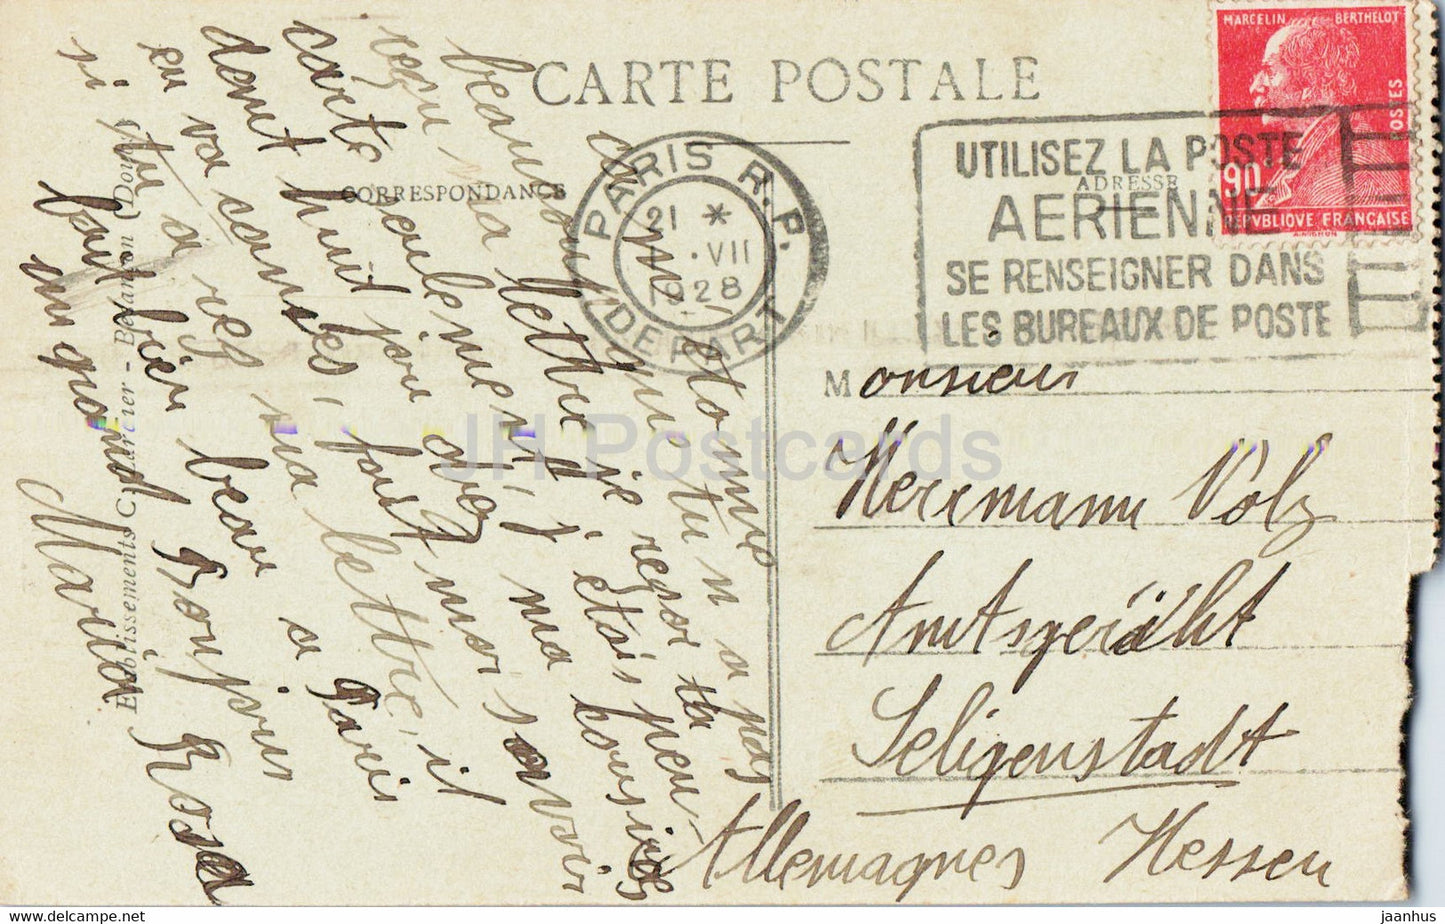 L'Isle sur le Doubs - Cites Meiner - old postcard - 1928 - France - used